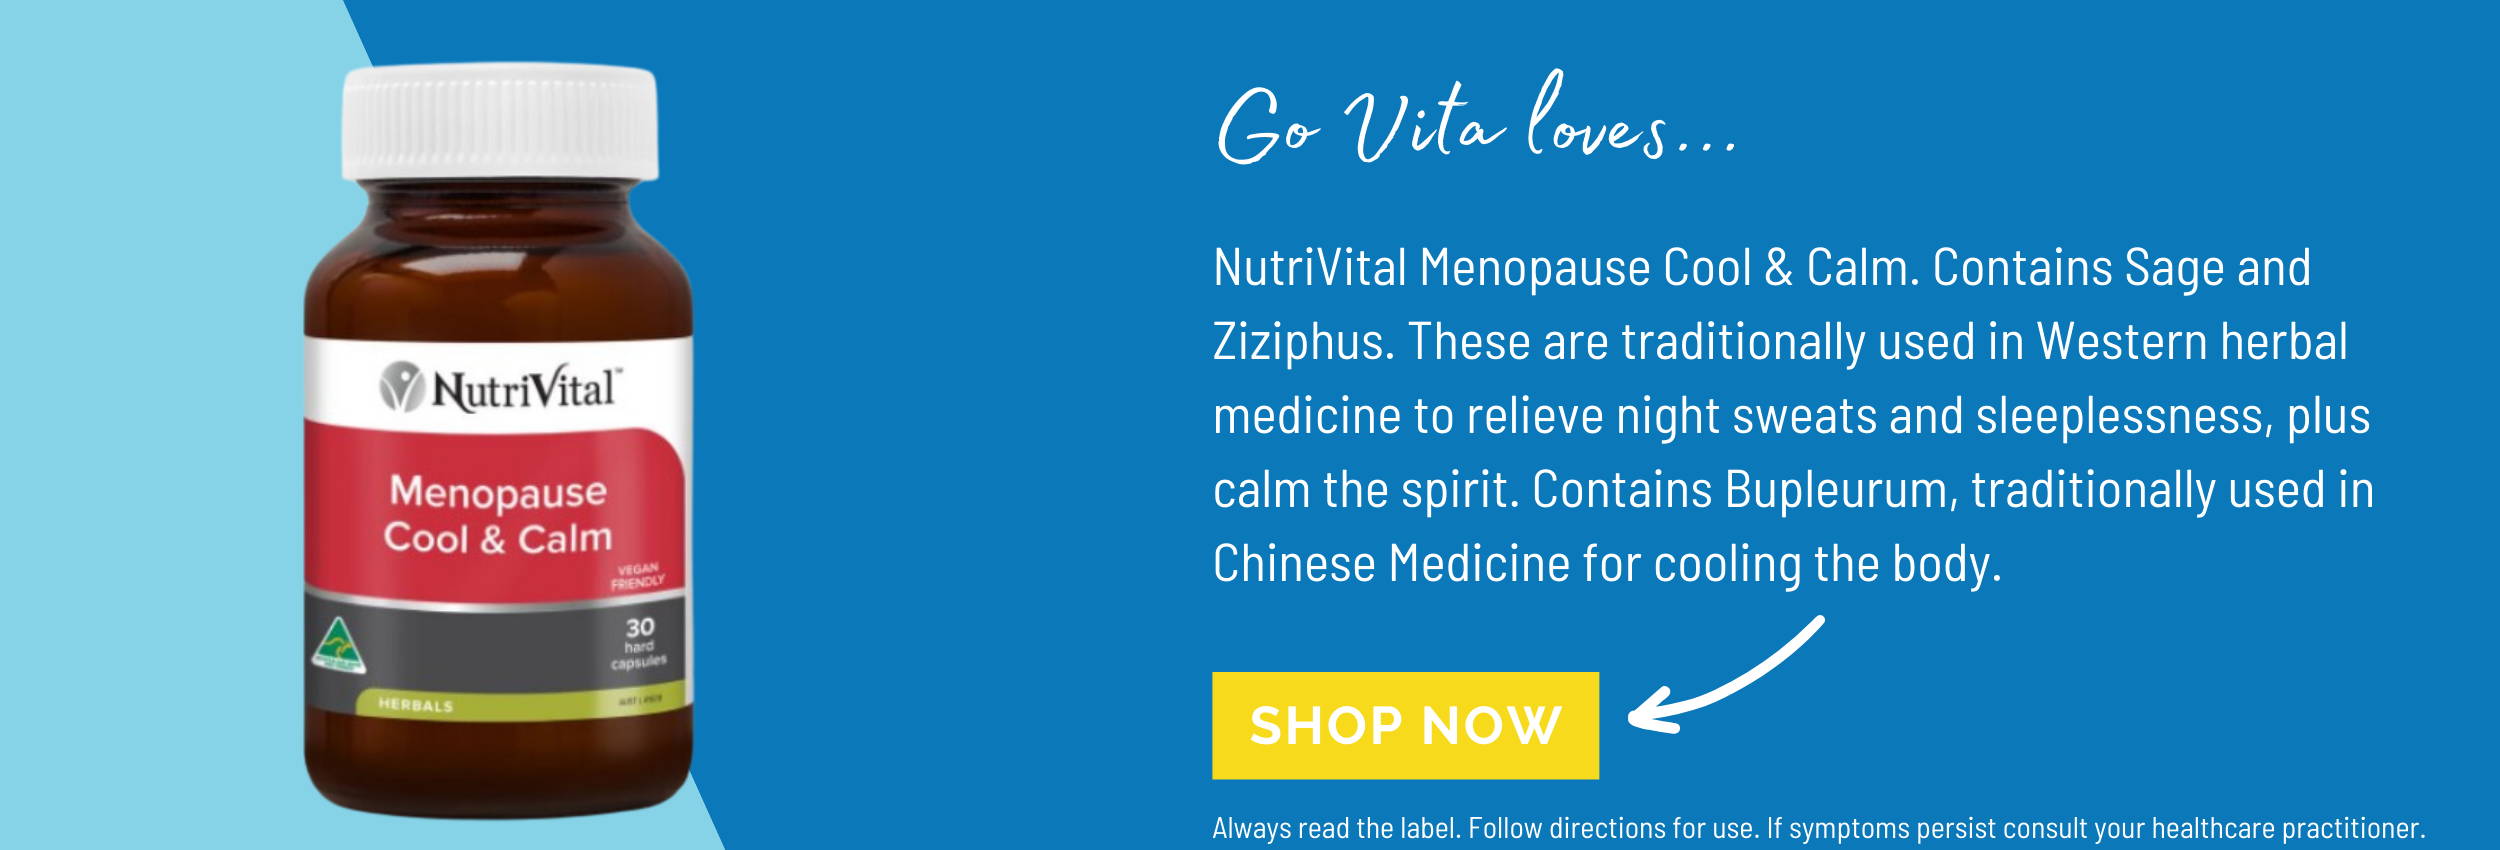  NutriVital Menopause Cool & Calm at Go Vita 